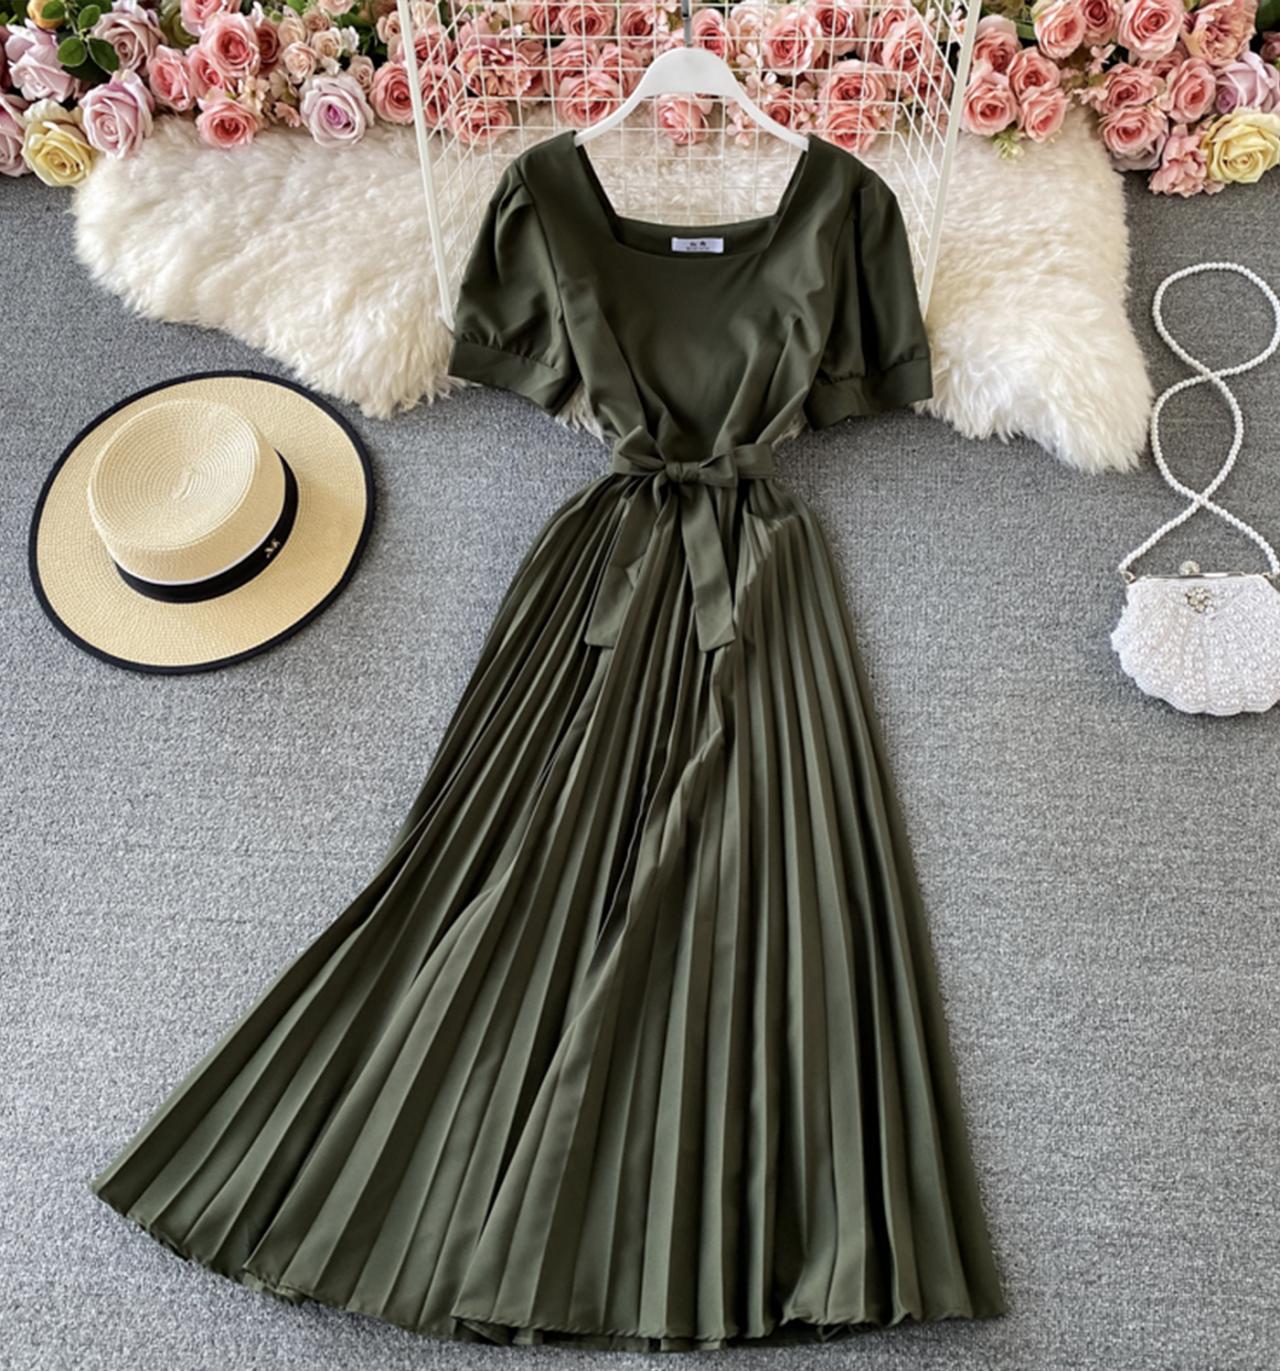 Süßes kurzes Kleid in A-Linie, einfaches Kleid 674